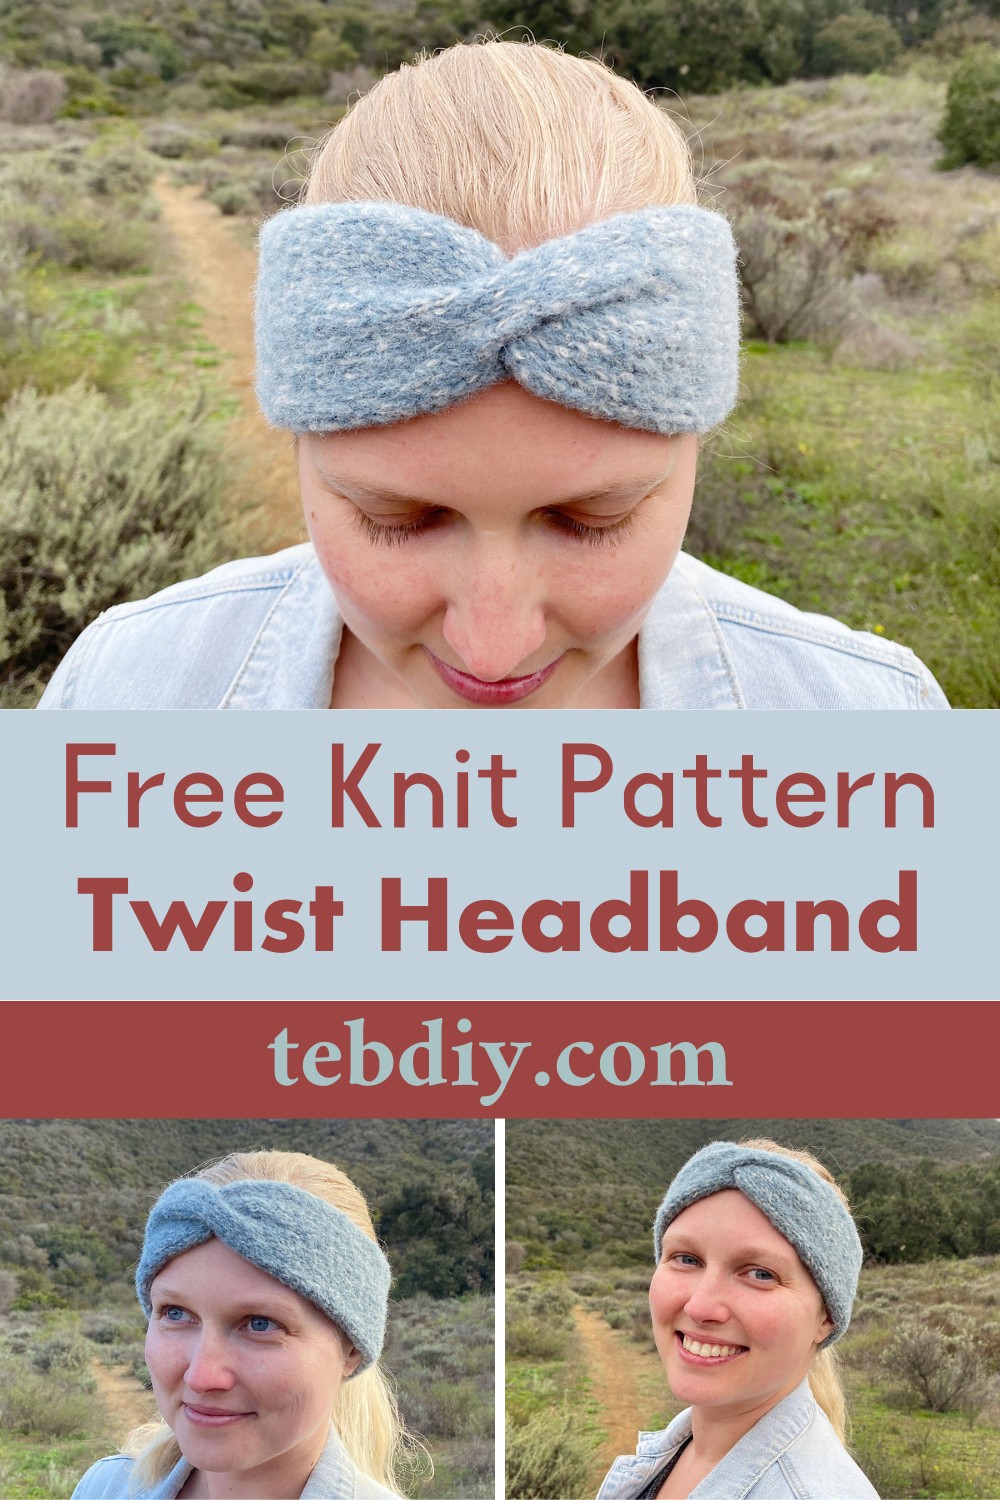 Do the Twist Headband